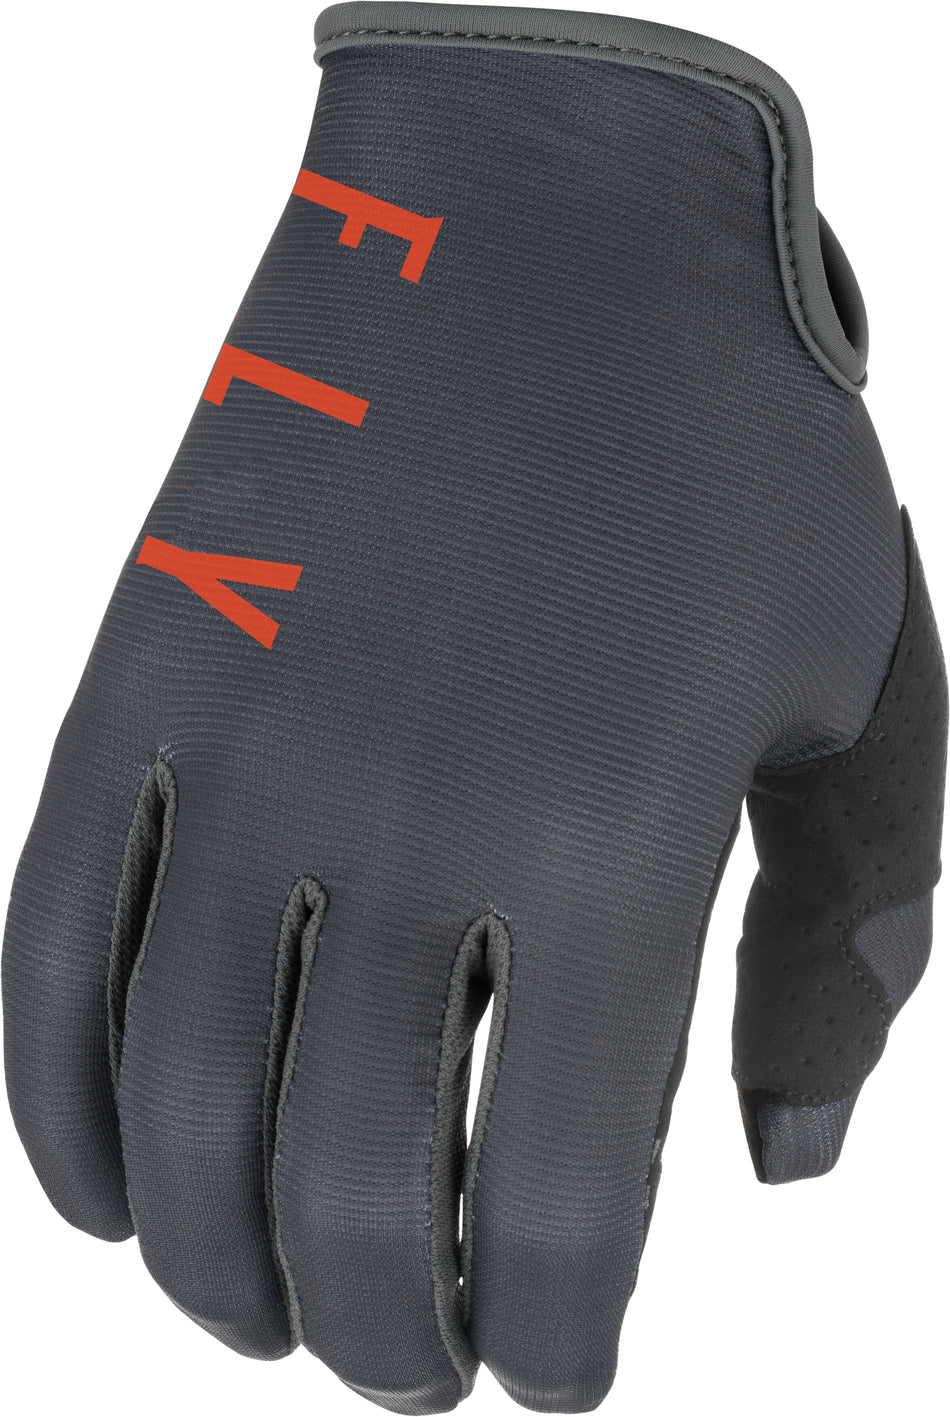 FLY RACING Lite Gloves Grey/Orange/Black Sz 08 374-71608